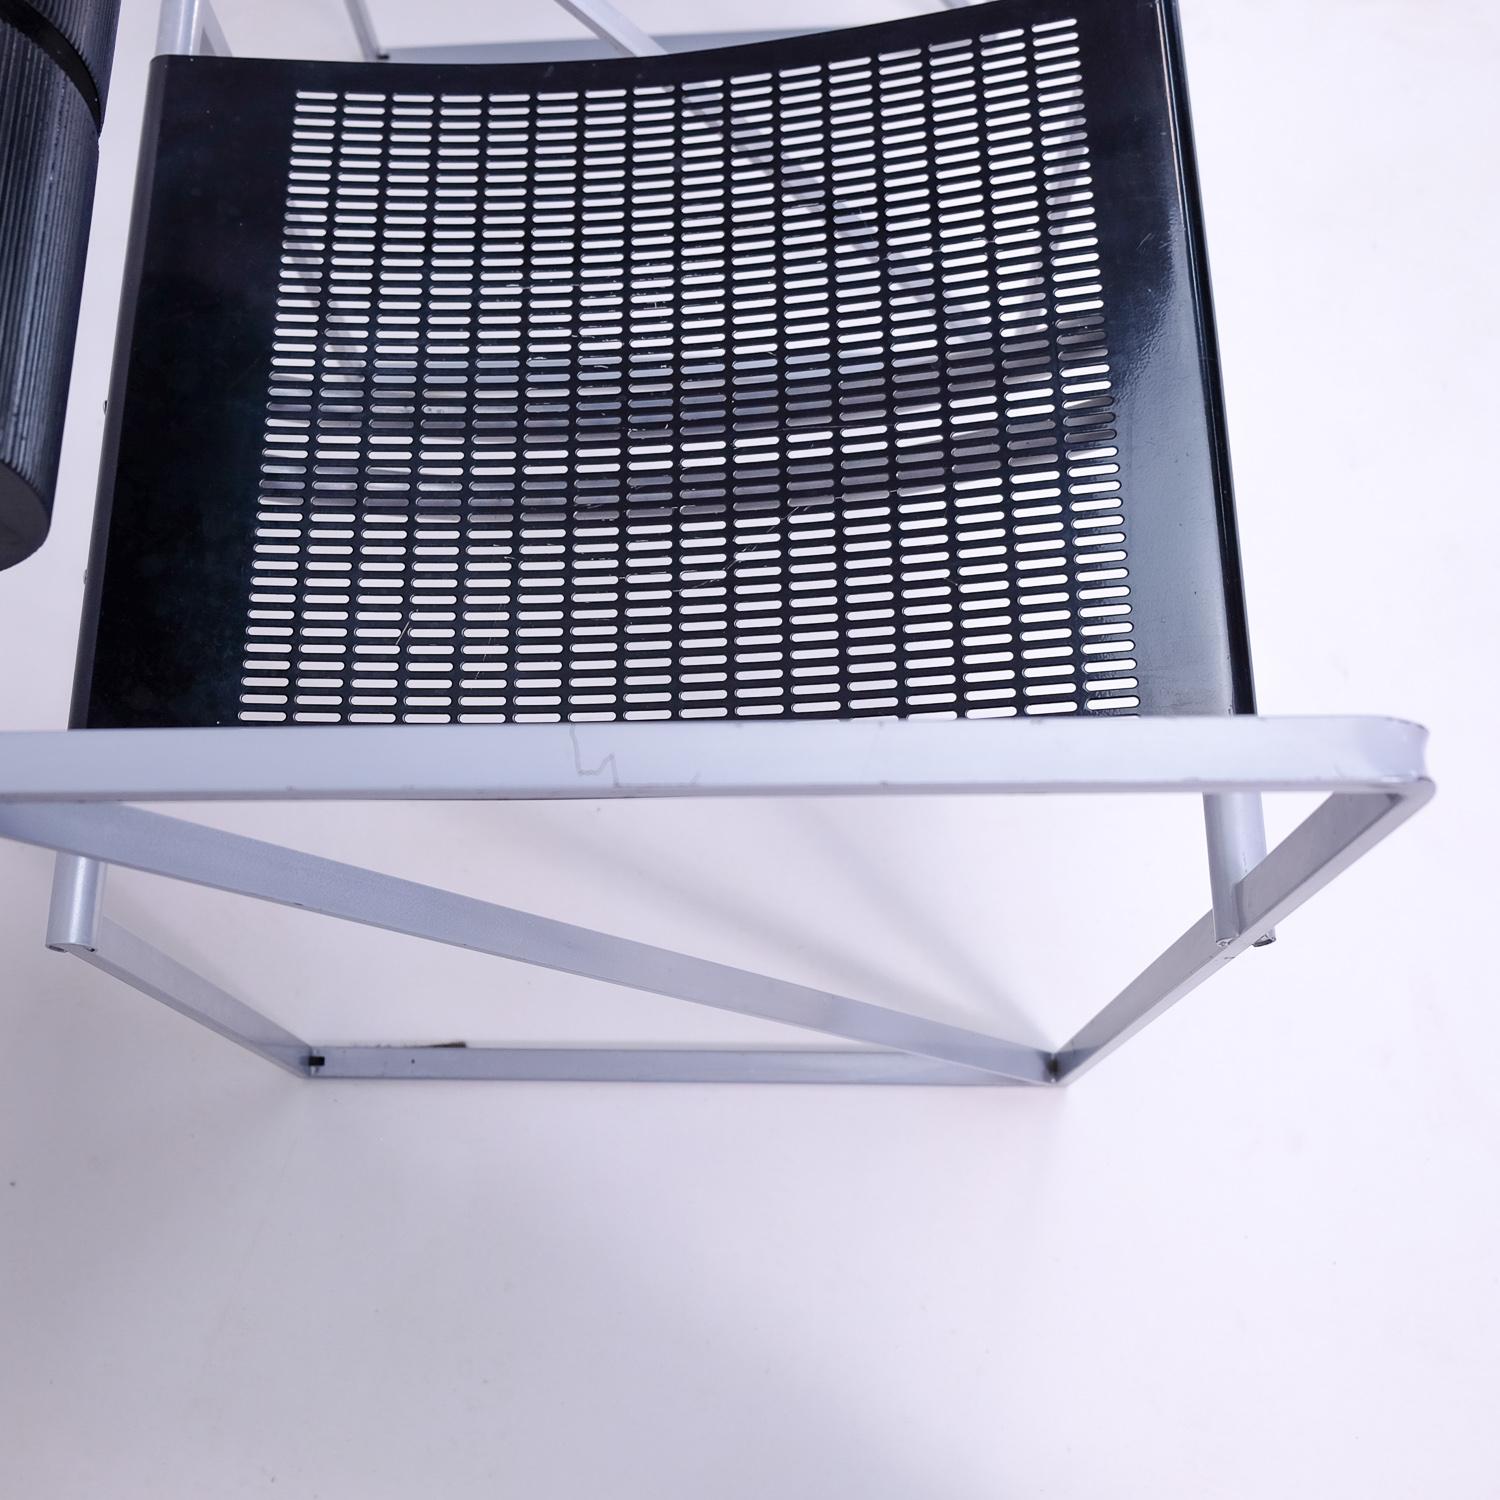 Post Modern Swiss Design Seconda Chairs by Mario Botta for Alias, 1980s 8